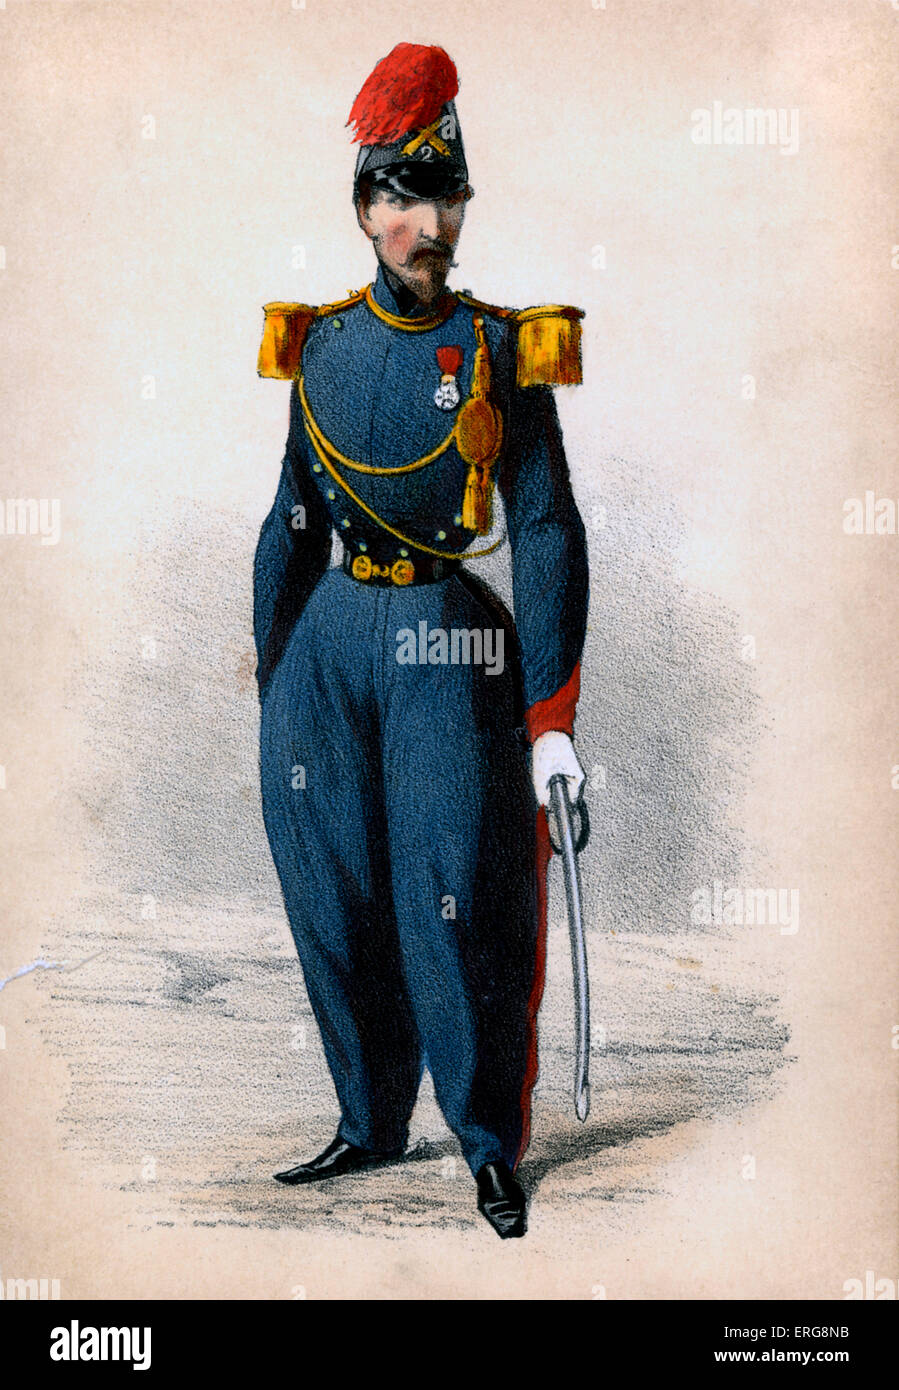 Offizier d'Artillerie: 19. Jahrhundert Artillerie-Offizier. Artillerie-Uniformen in den meisten Armeen waren in der Regel von dunkelblau. Aus Serie Stockfoto